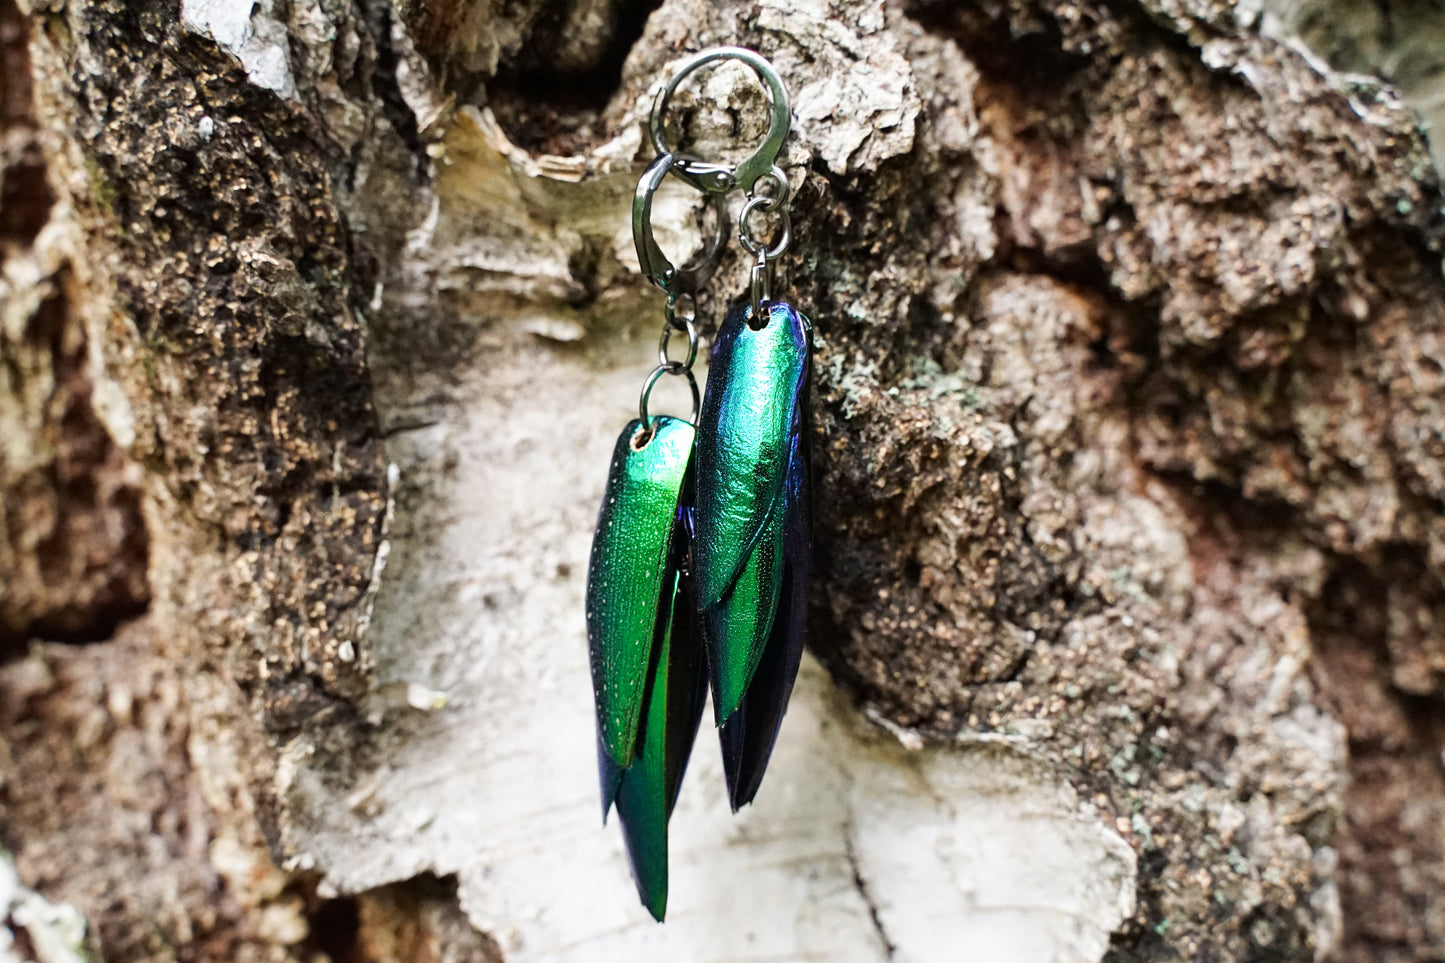 Beetle wing earrings